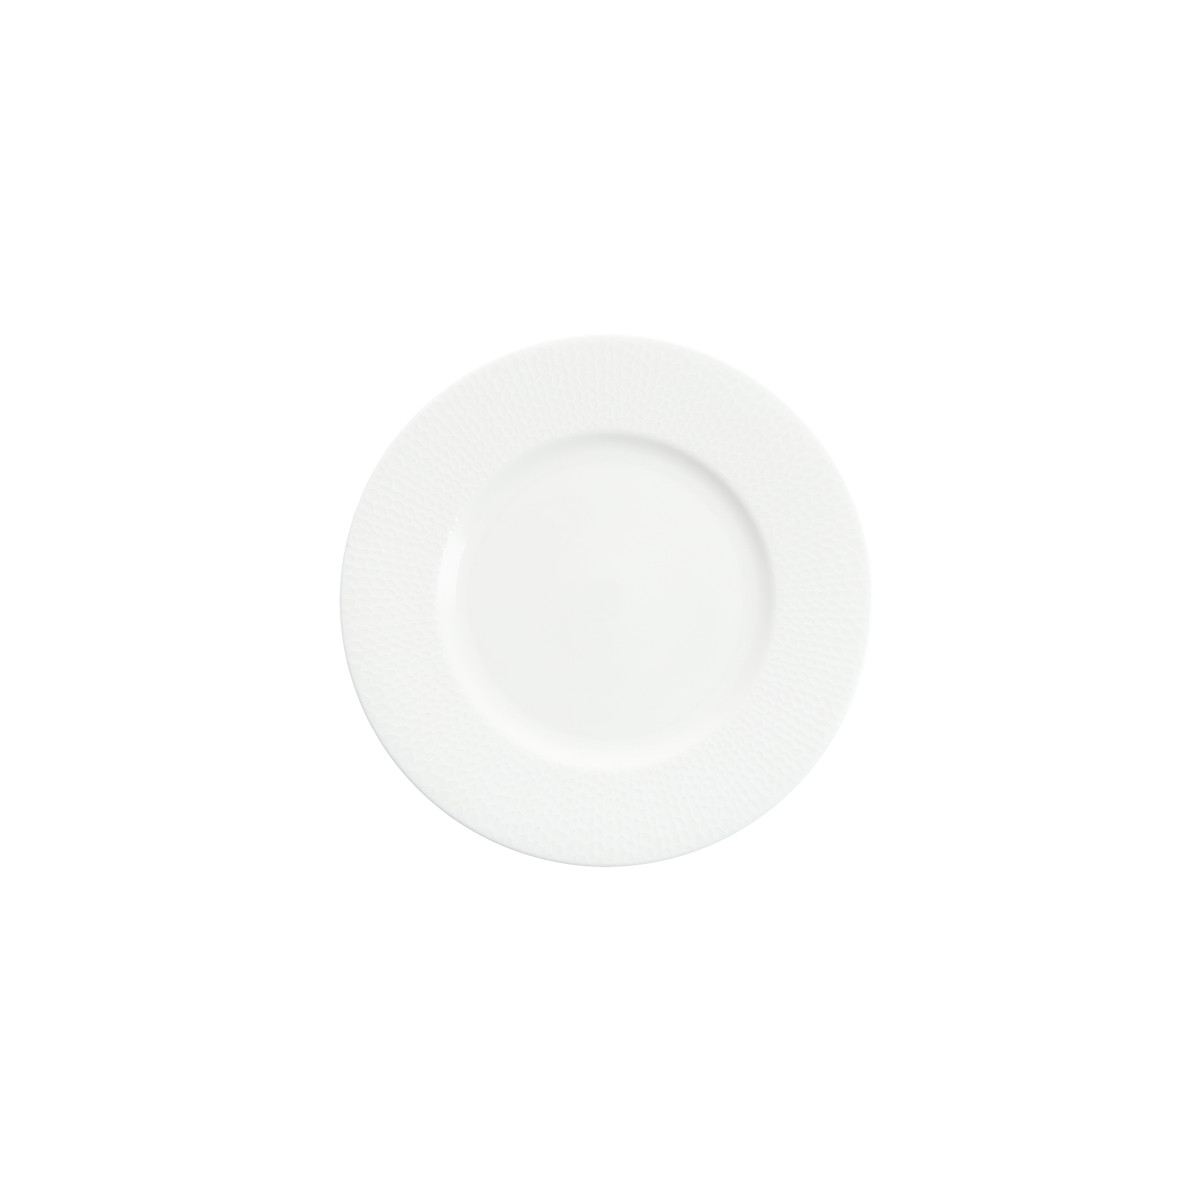 Amanda Salad Plate, White, Set of 6